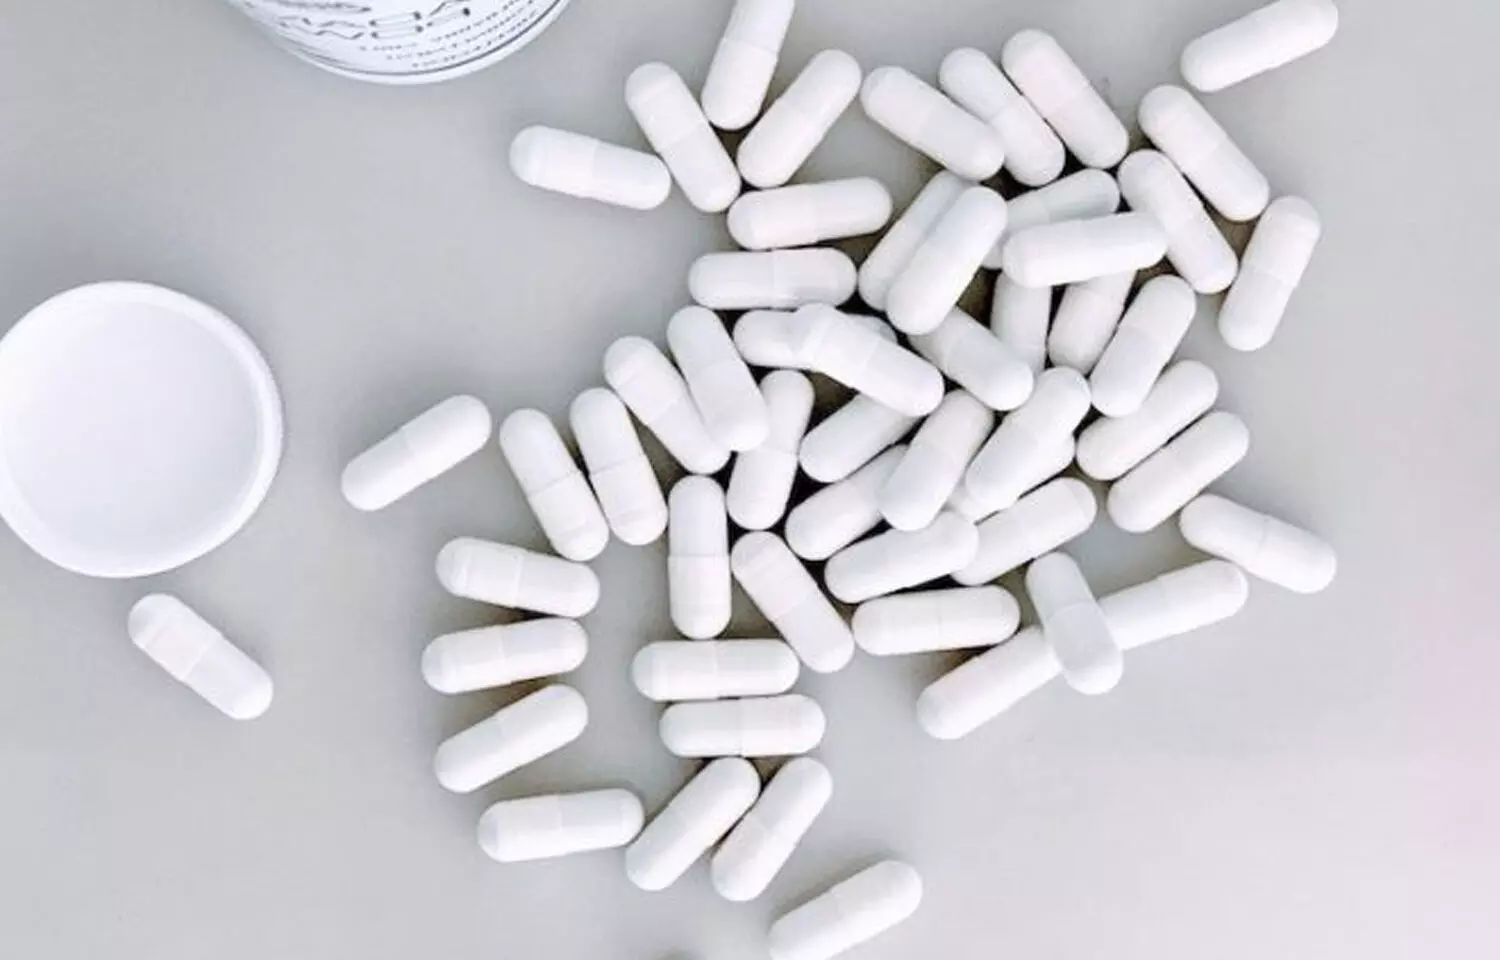 Cholestyramine use with antibiotics may decrease risk of antibiotic resistance: Study